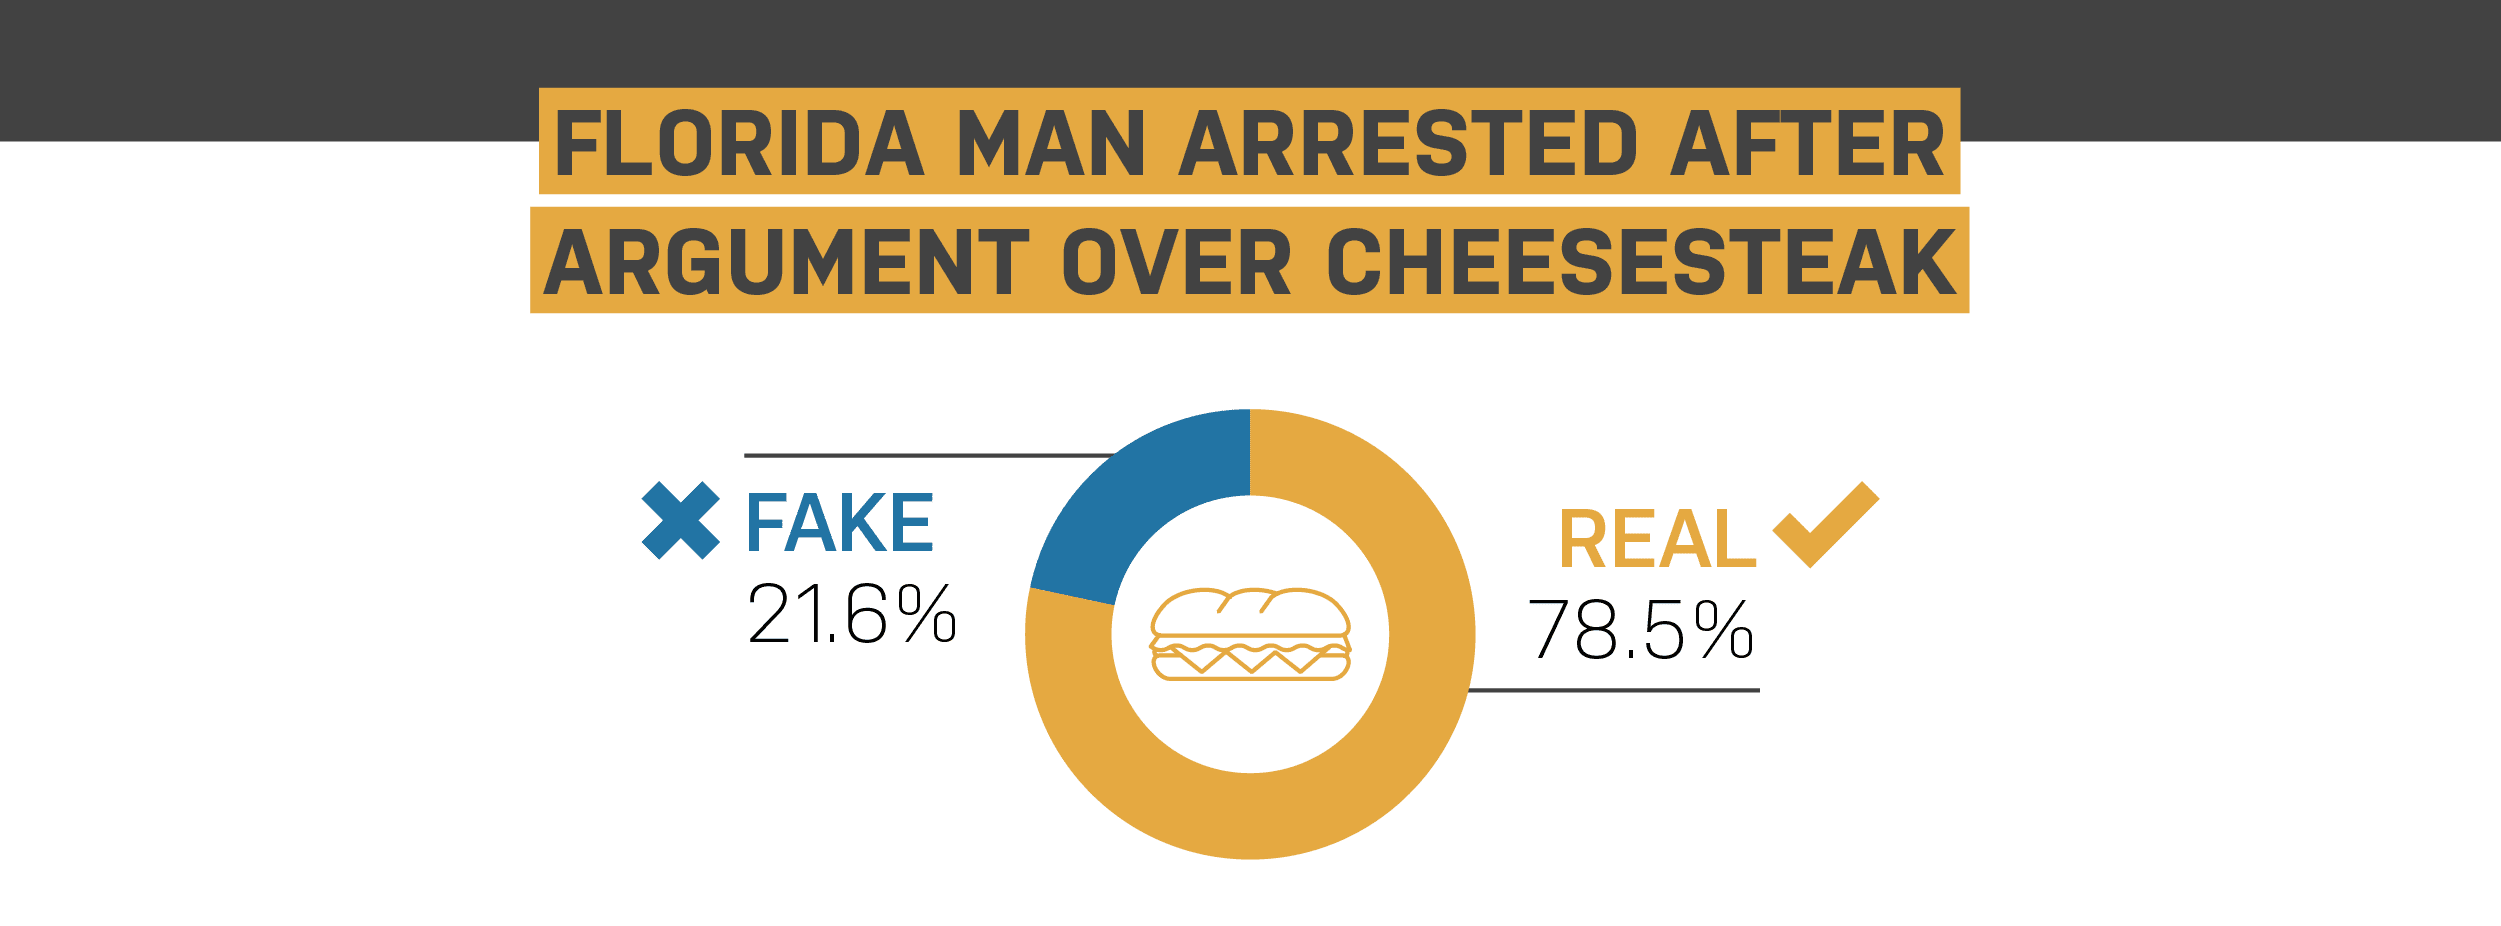 florida-man-arrested-over-cheesesteak